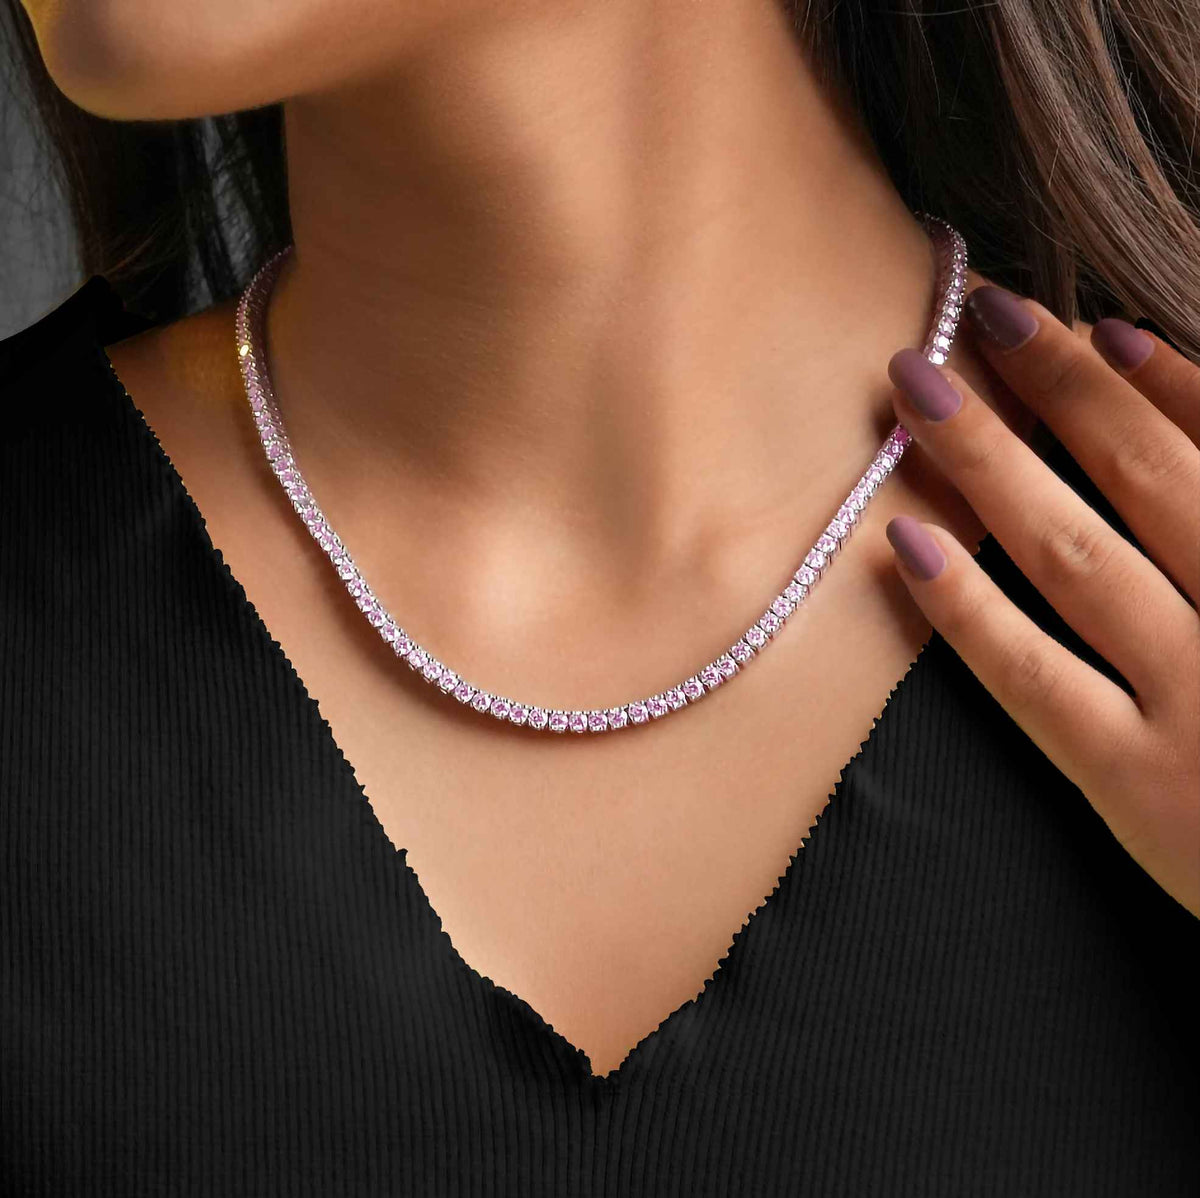 Diana Pink Diamond Tennis Necklace in 18K White Gold Vermeil 18 inch